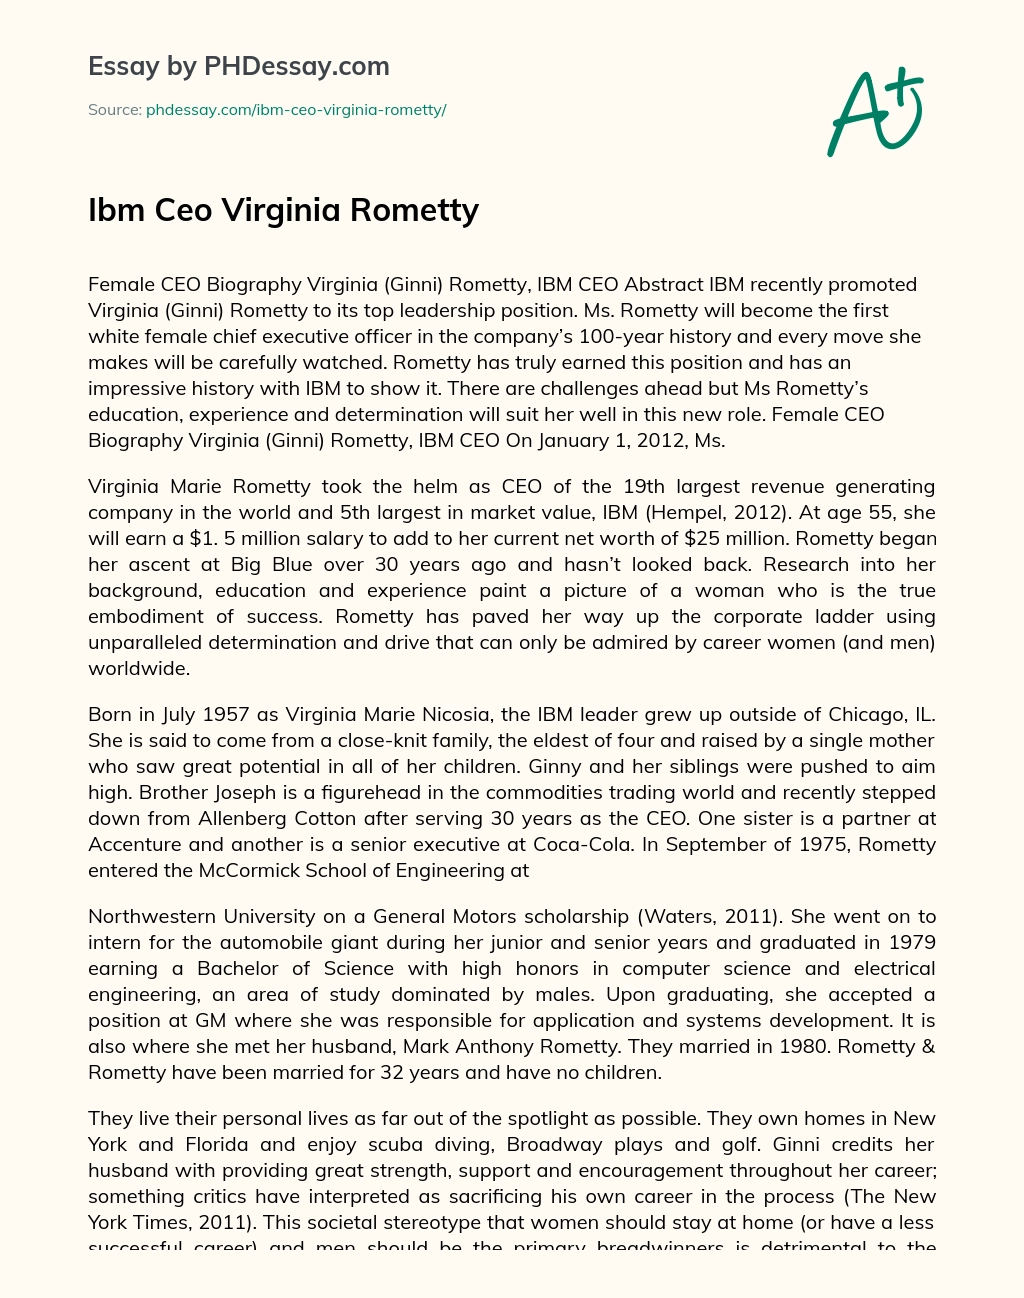 Ibm Ceo Virginia Rometty essay